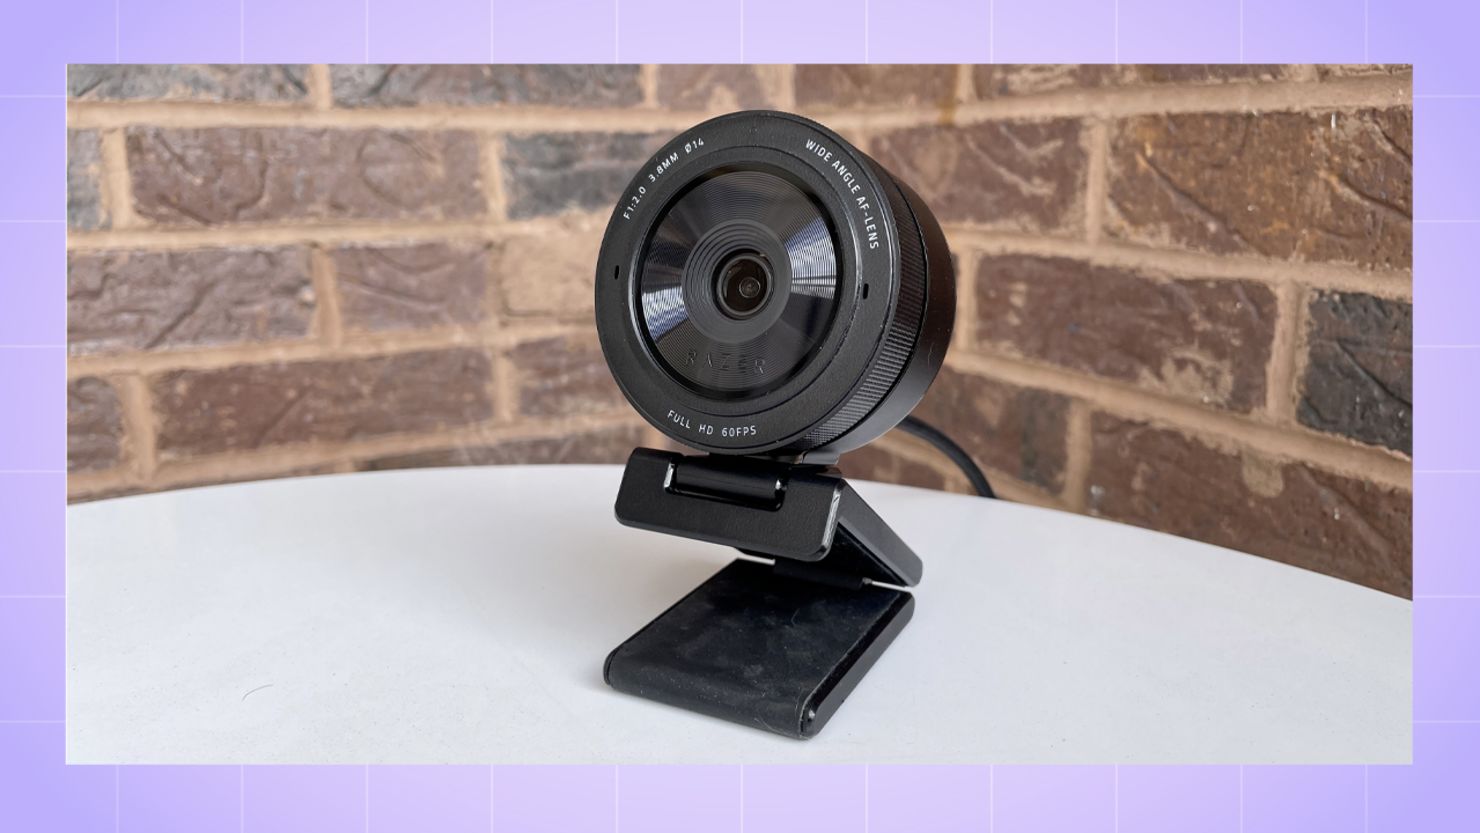 Razer Kiyo Pro Webcam with Adaptive Light Sensor